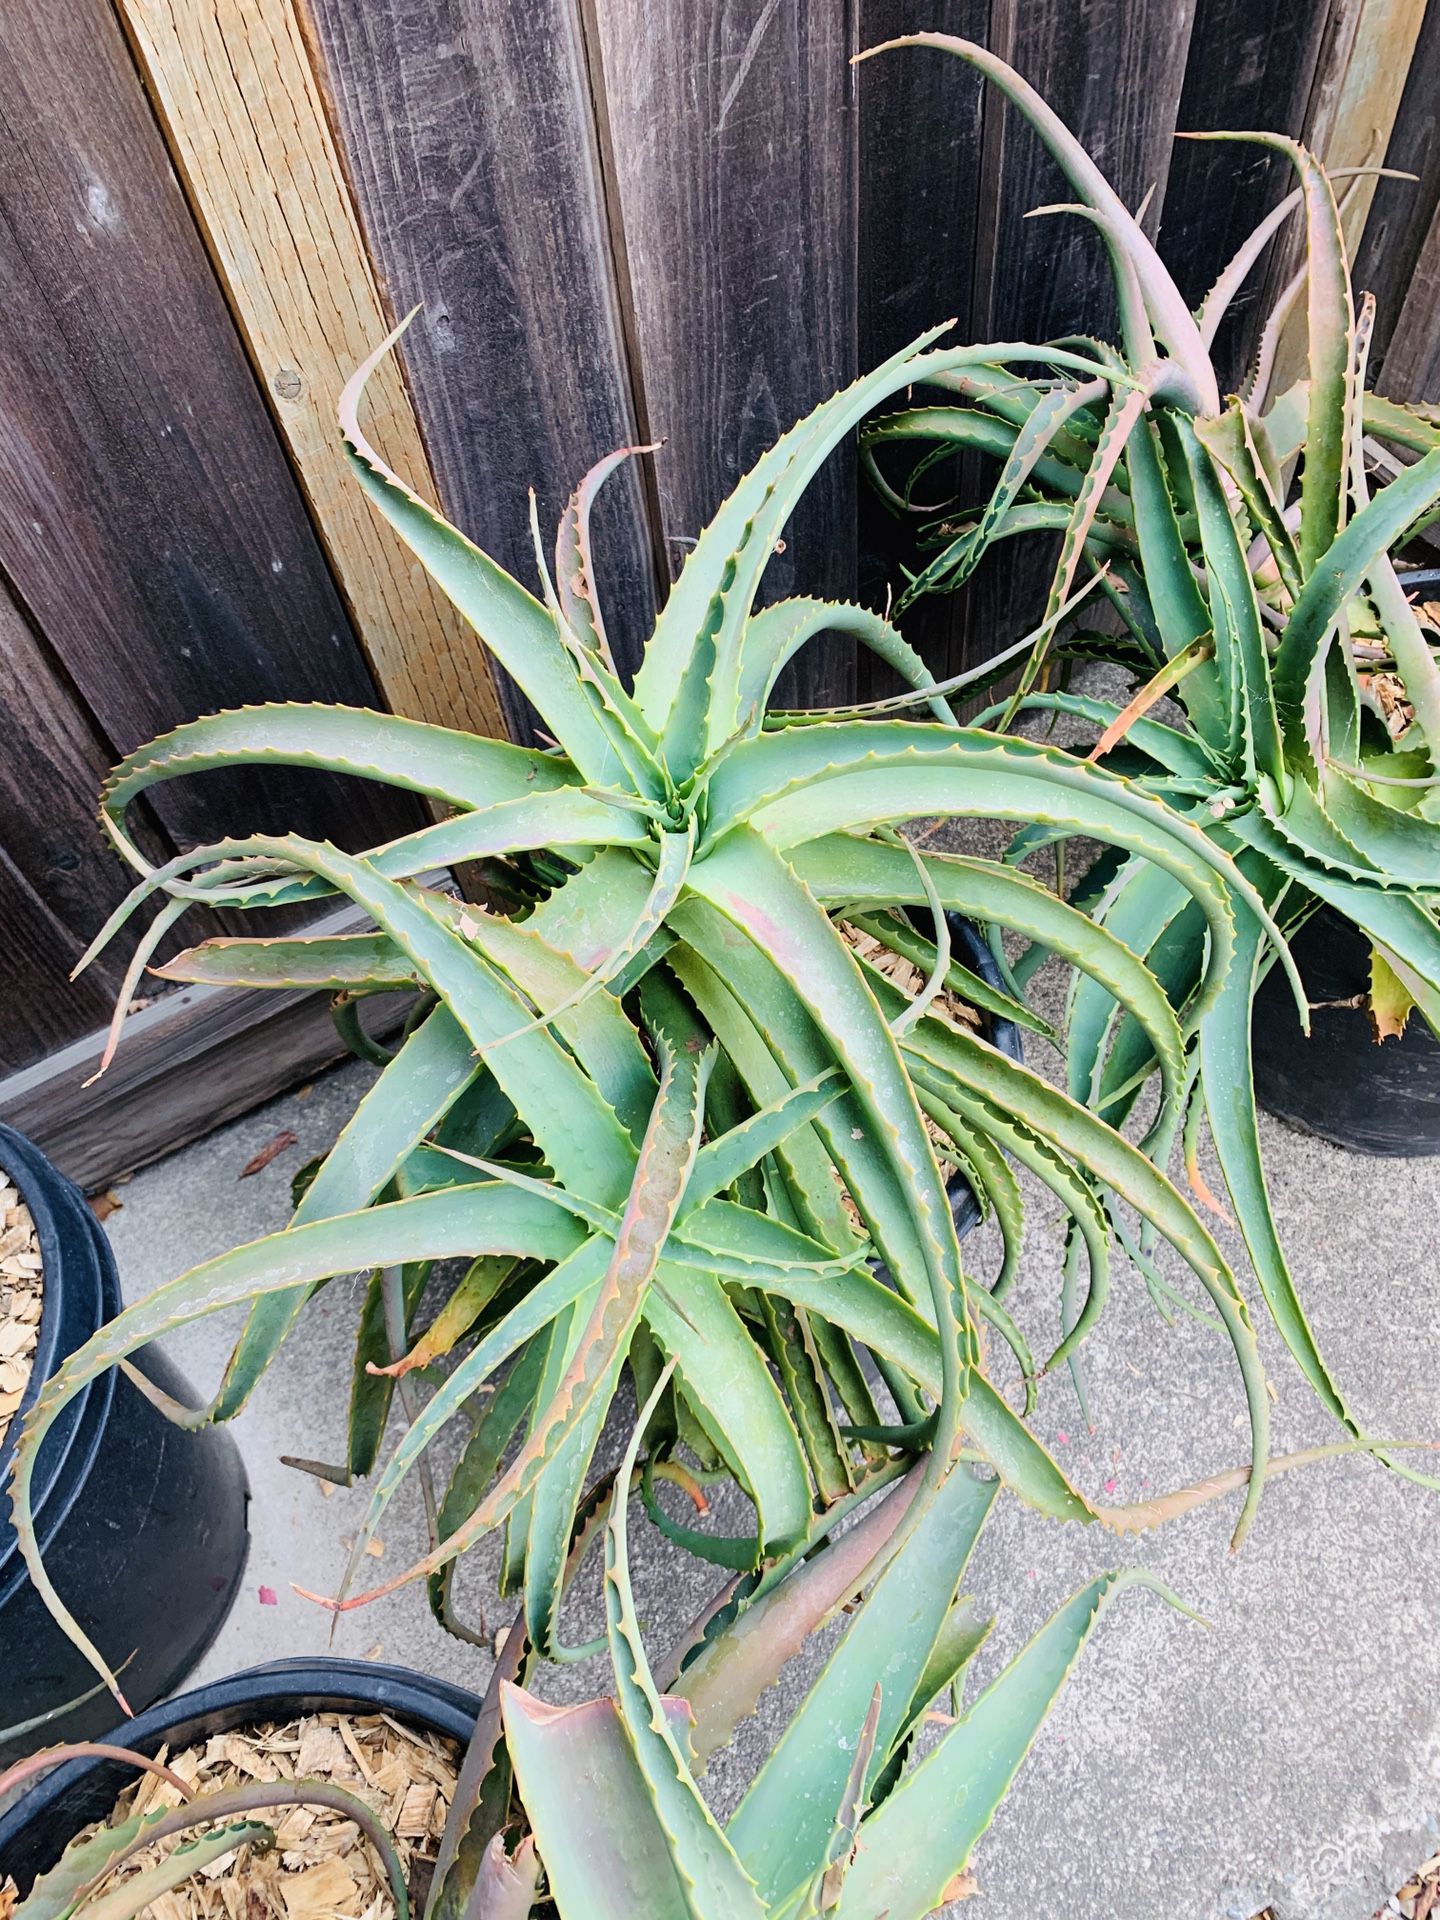 Mature Potted Candelabra/Arborescens/Torch Aloe Plants